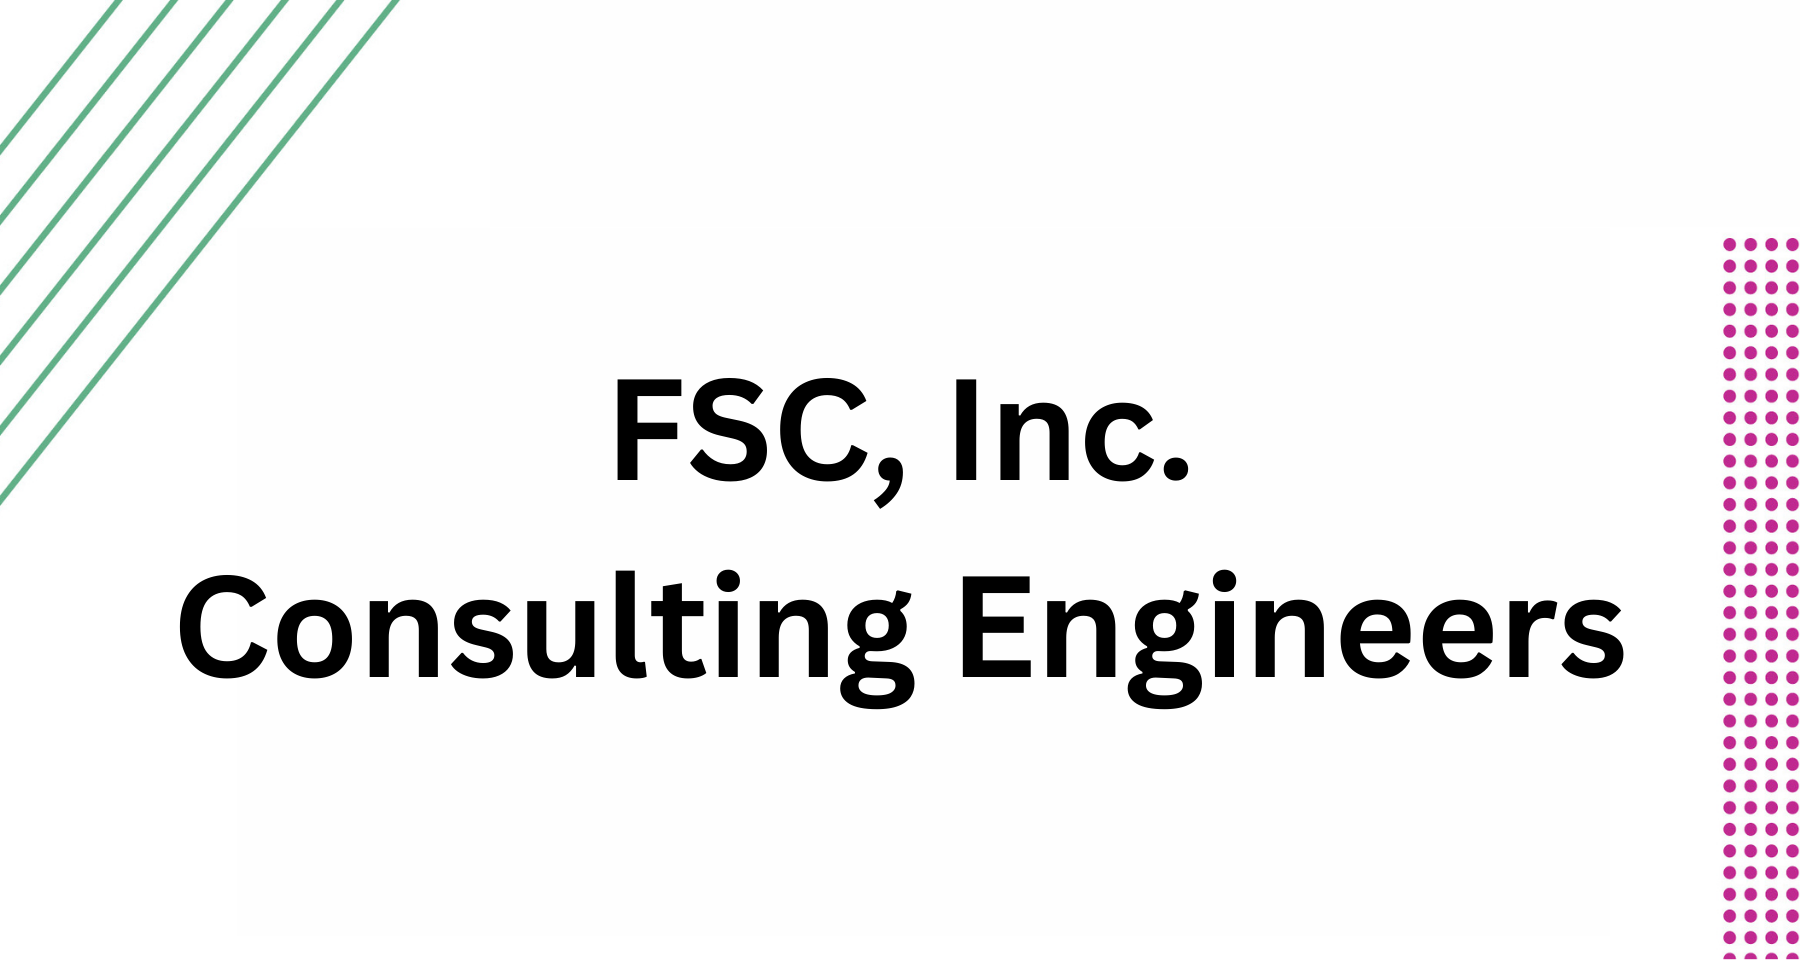 FSC, Inc Consulitng Engineers